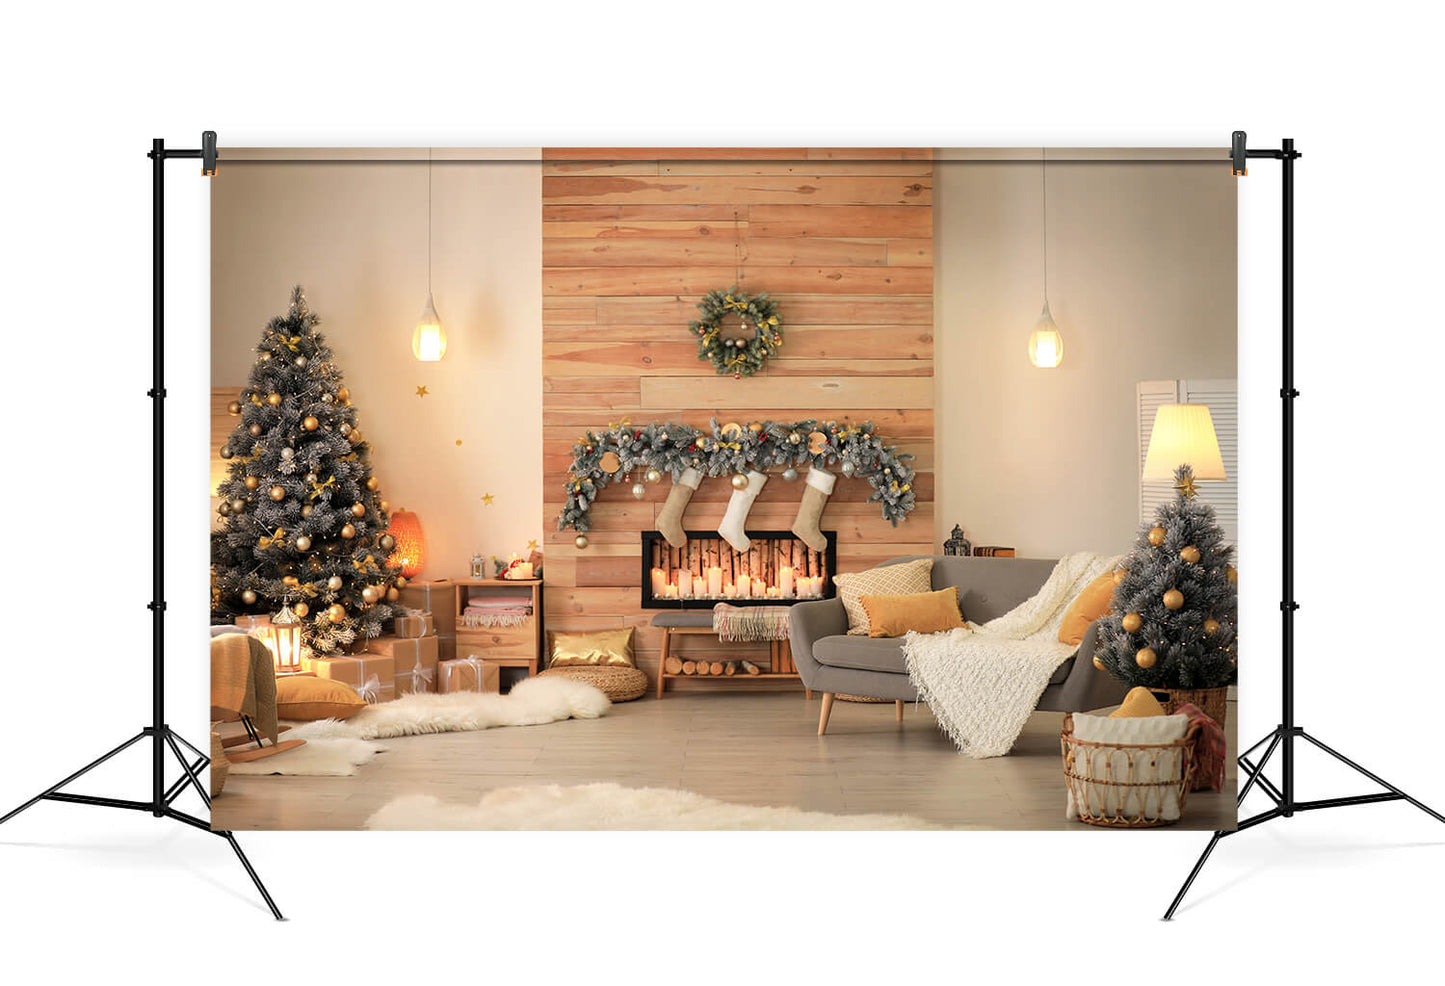 Christmas Tree Fireplace Room Interior Backdrop M6-140 – Dbackdrop